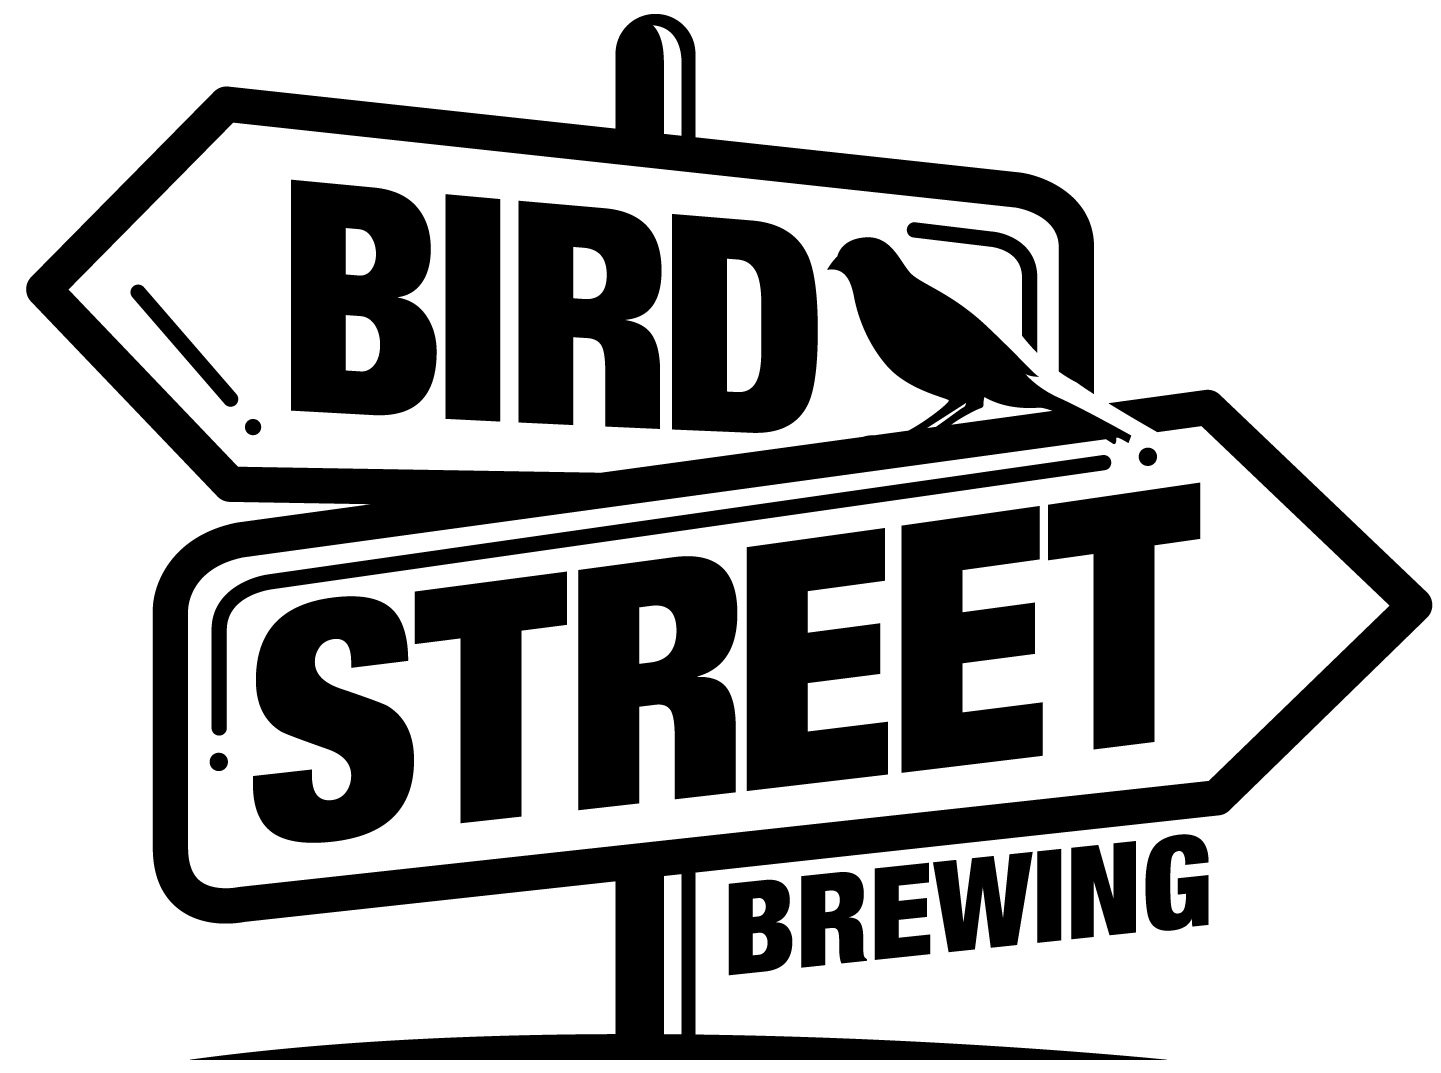 Bird Street Brewing